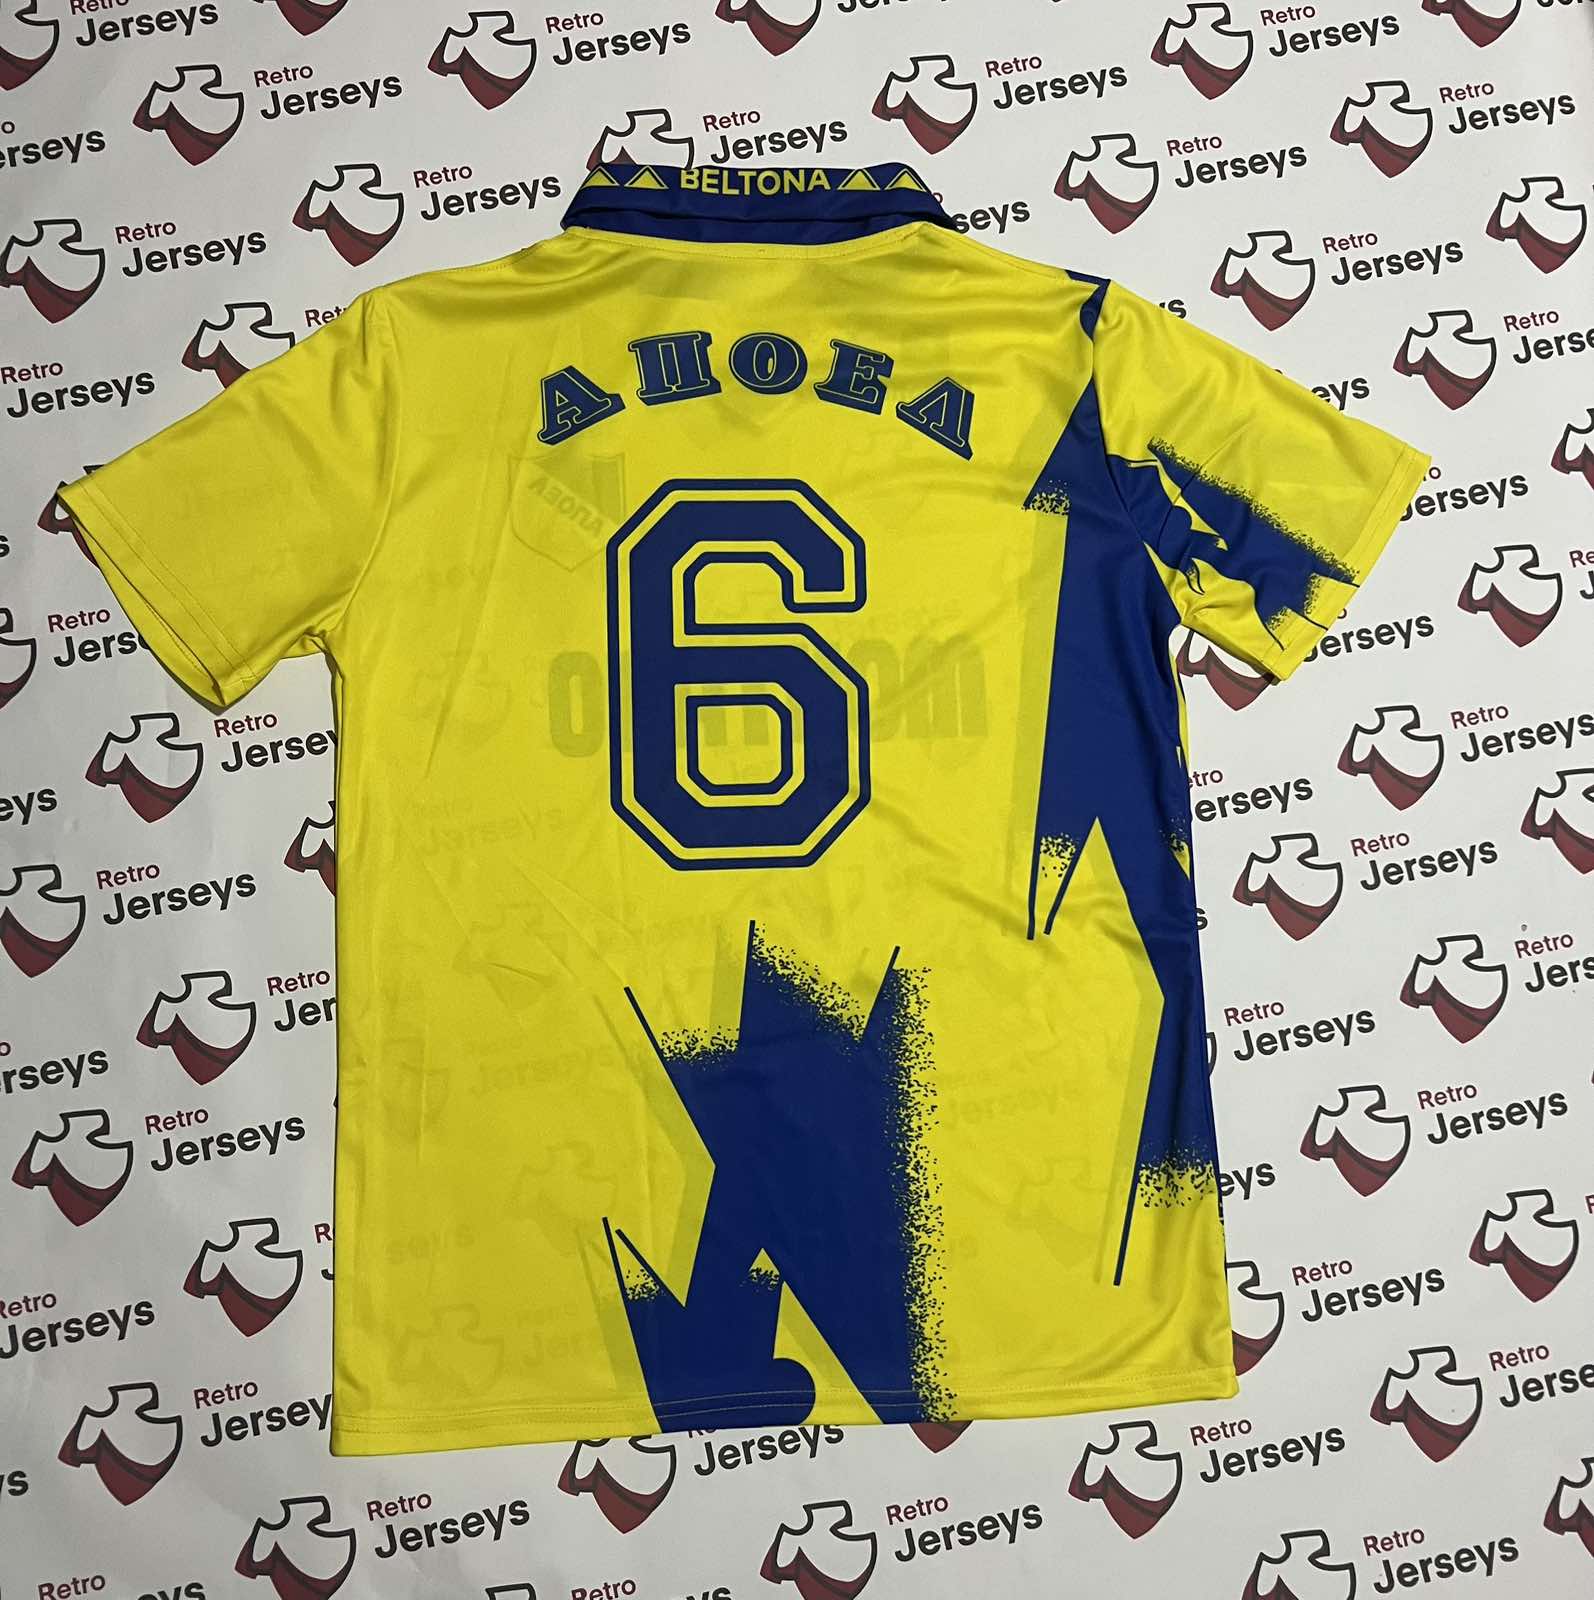 APOEL Nicosia Shirt 1995-1996 Home - Retro Jersey, φανέλα αποέλ - Retro Jerseys